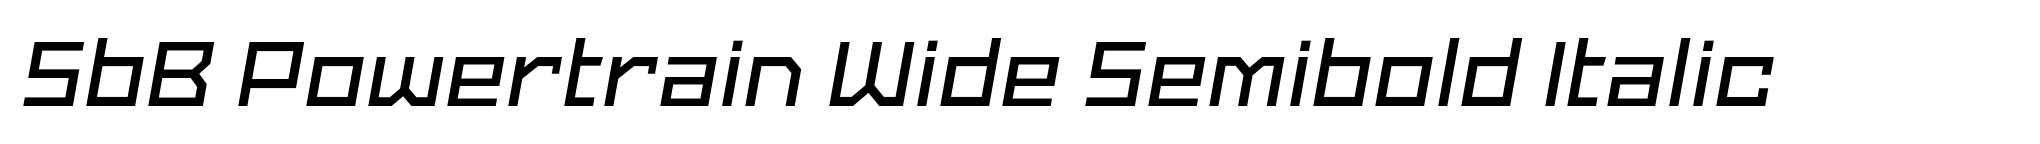 SbB Powertrain Wide Semibold Italic image